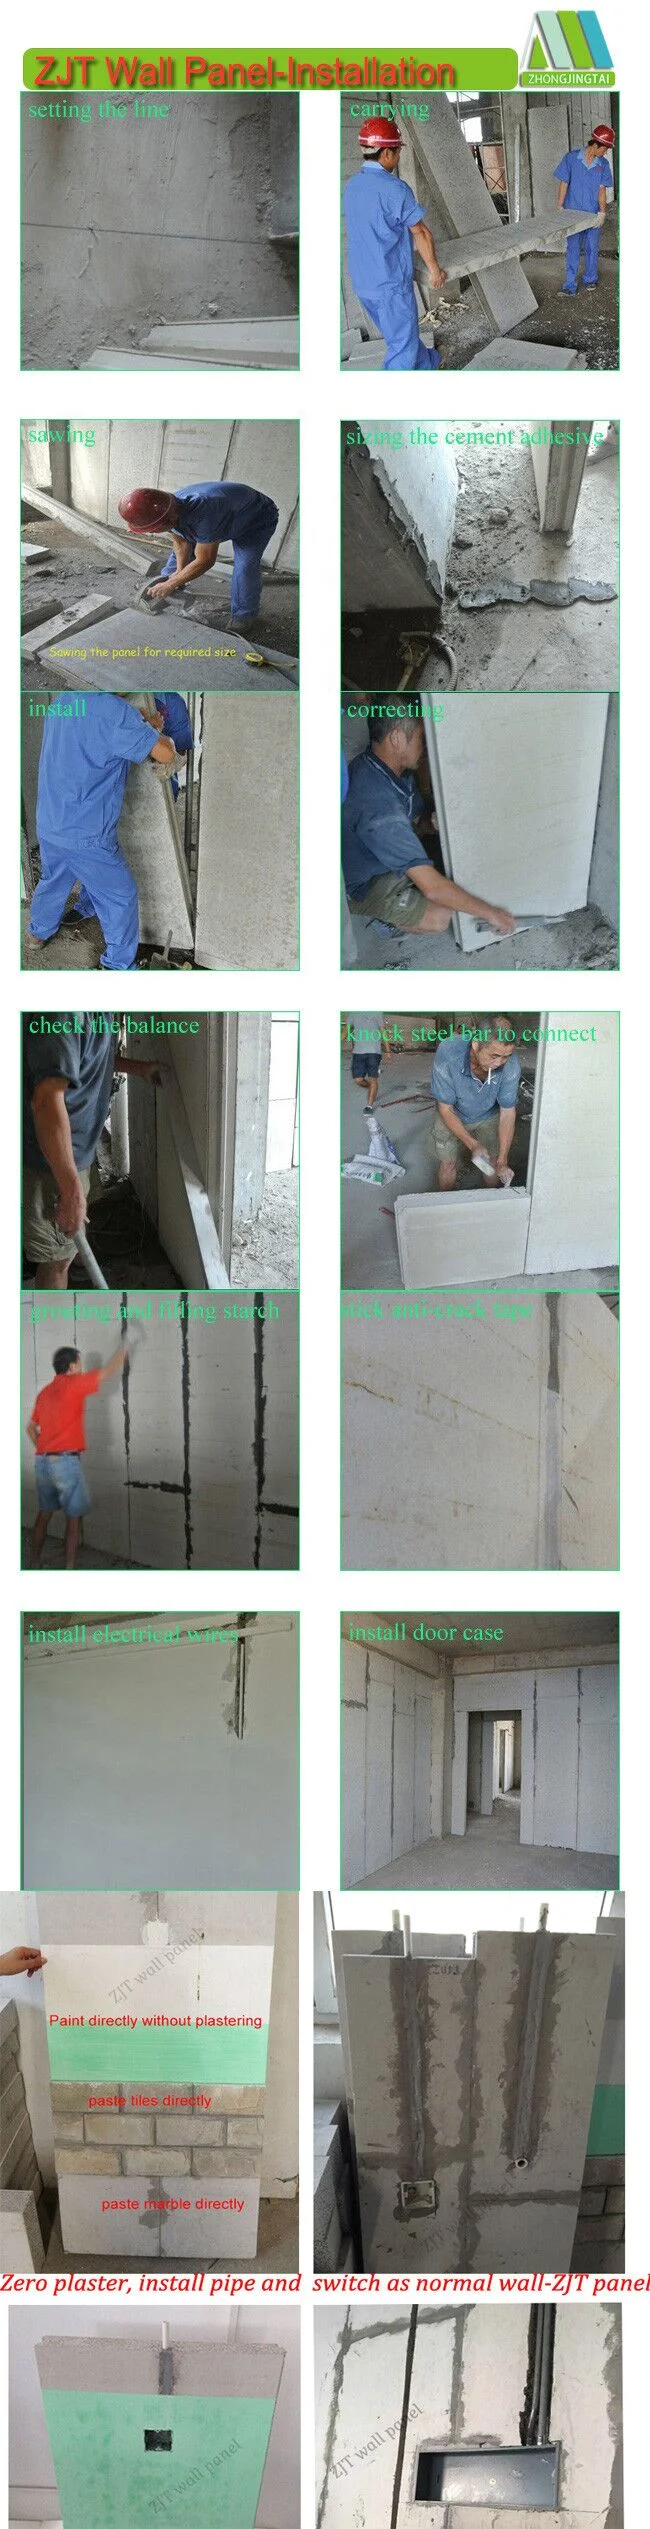 Exterior Polyurethane Foam Sandwich Wall Panel for Prefab House